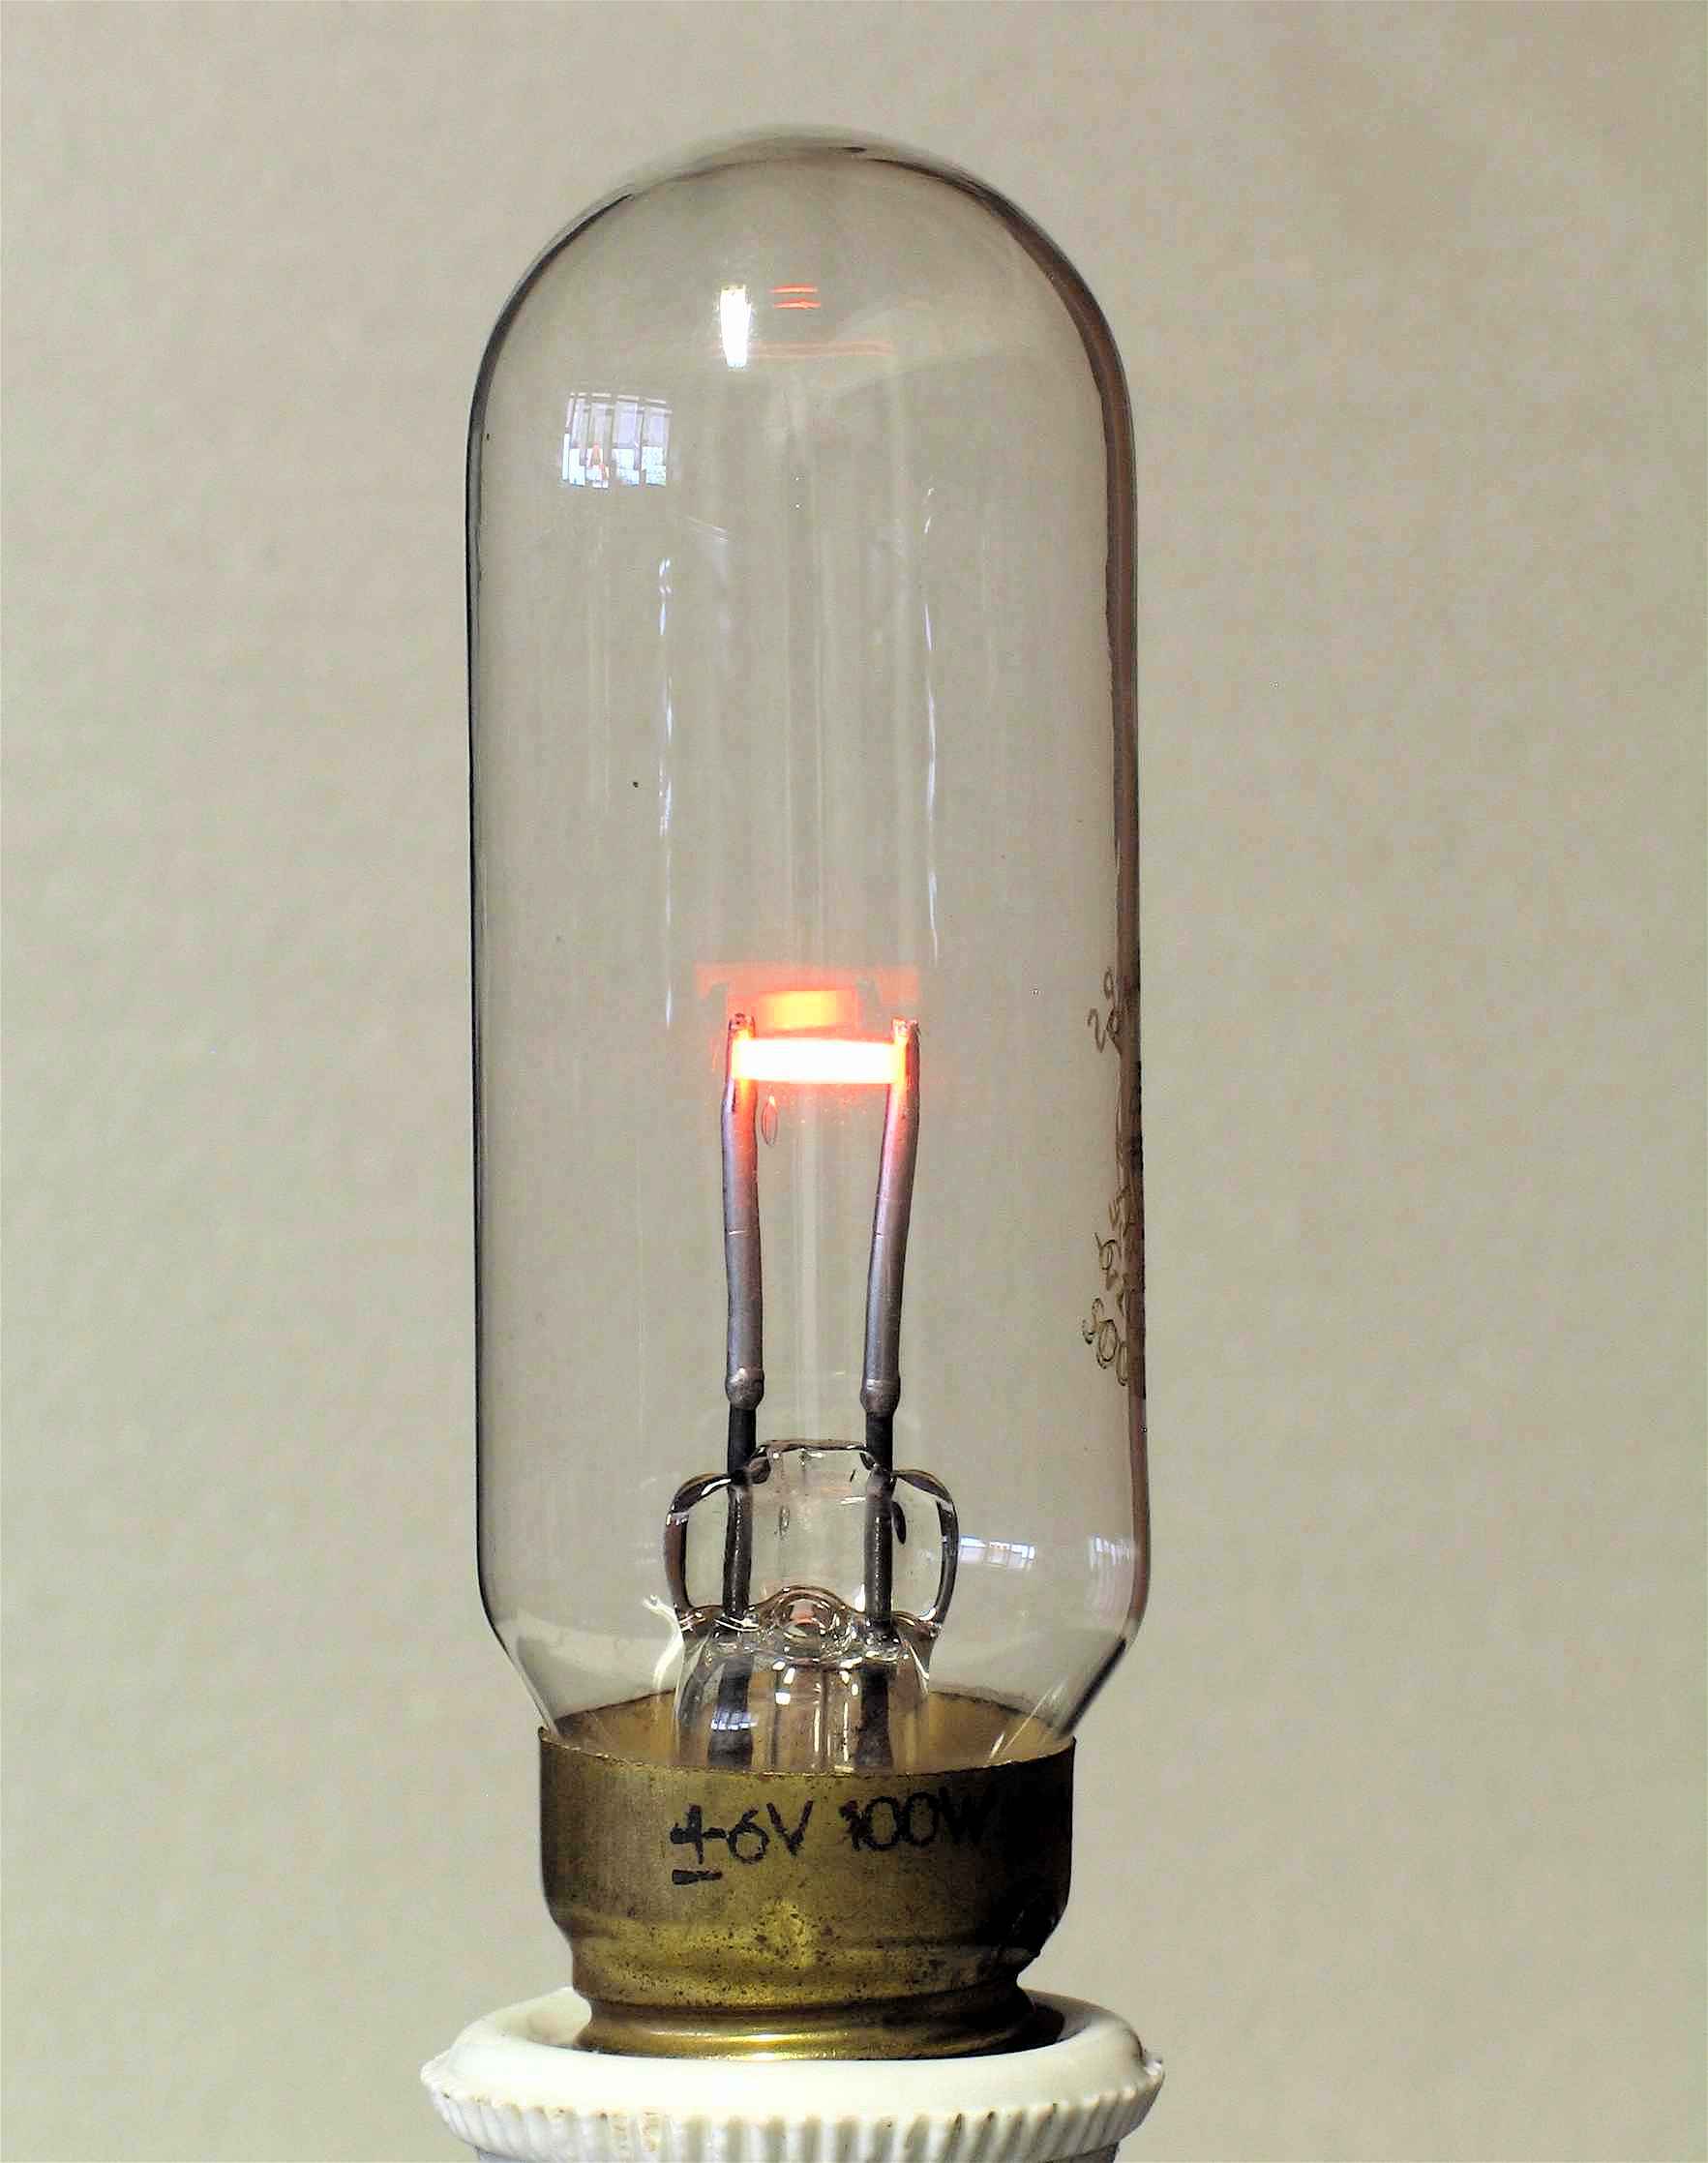 Lot de 7 lampes à ruban métallique
(“Micro-illuminateur”)